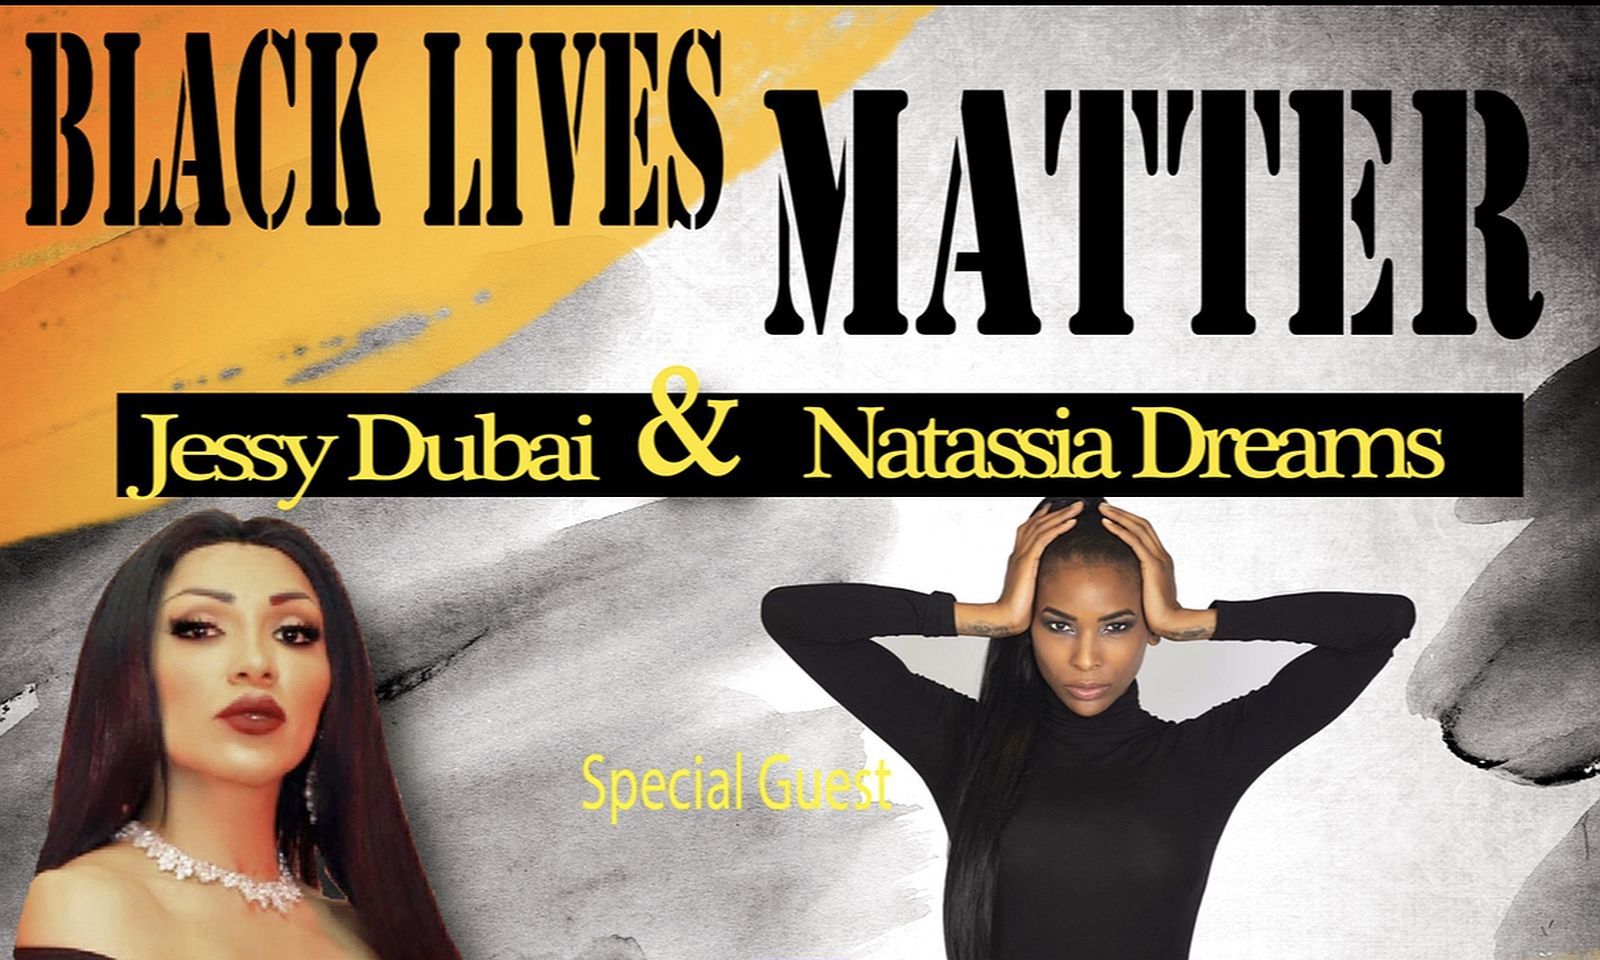 Jessy Dubai & Natassia Dreams Unite Forces for #BlackLivesMatters